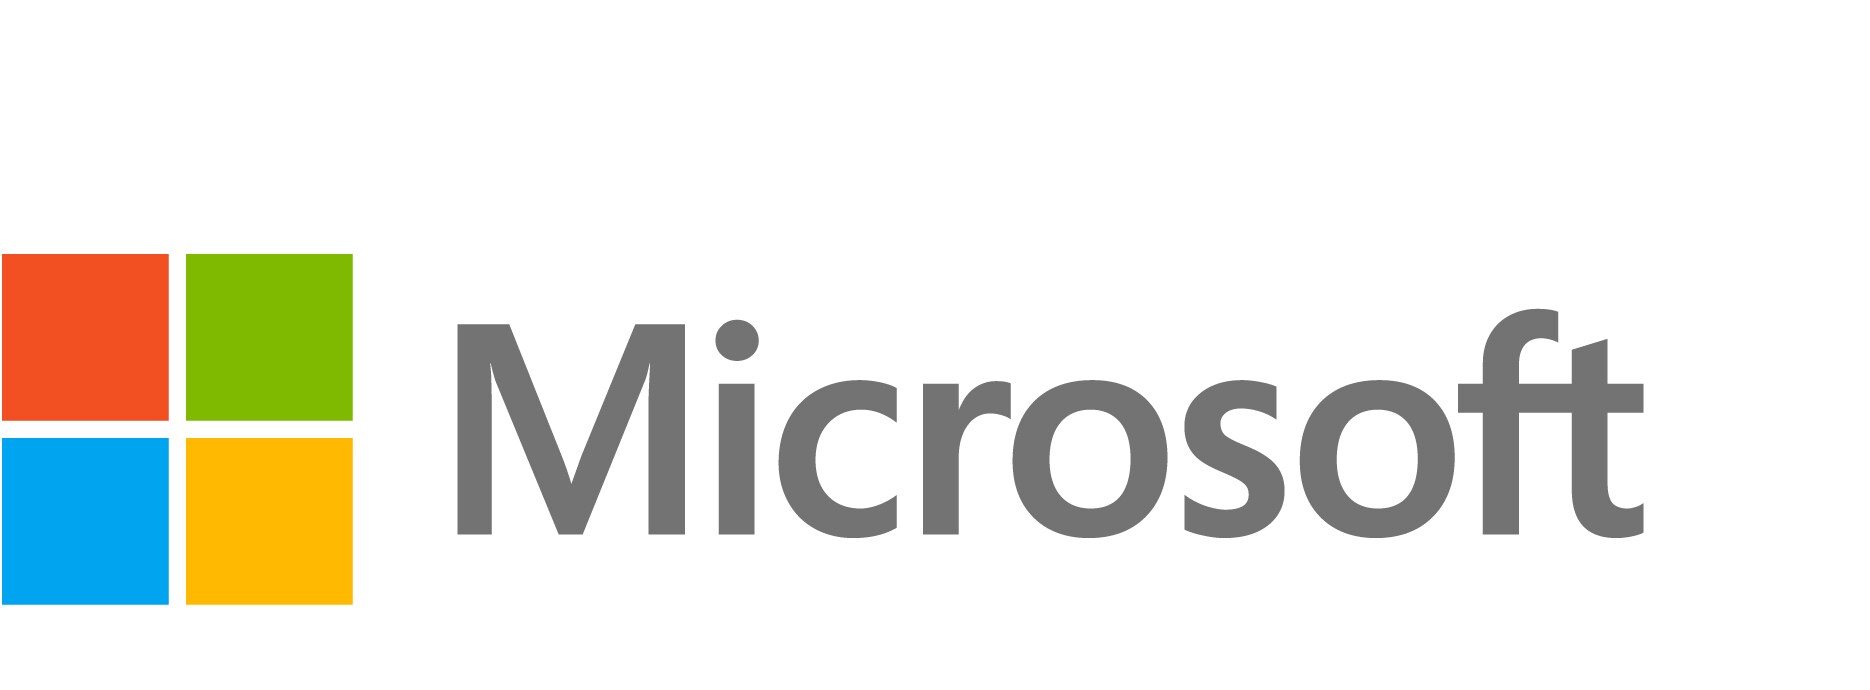 Windows 10/11 Enterprise A5 - subscription license (1 year) - 1 license